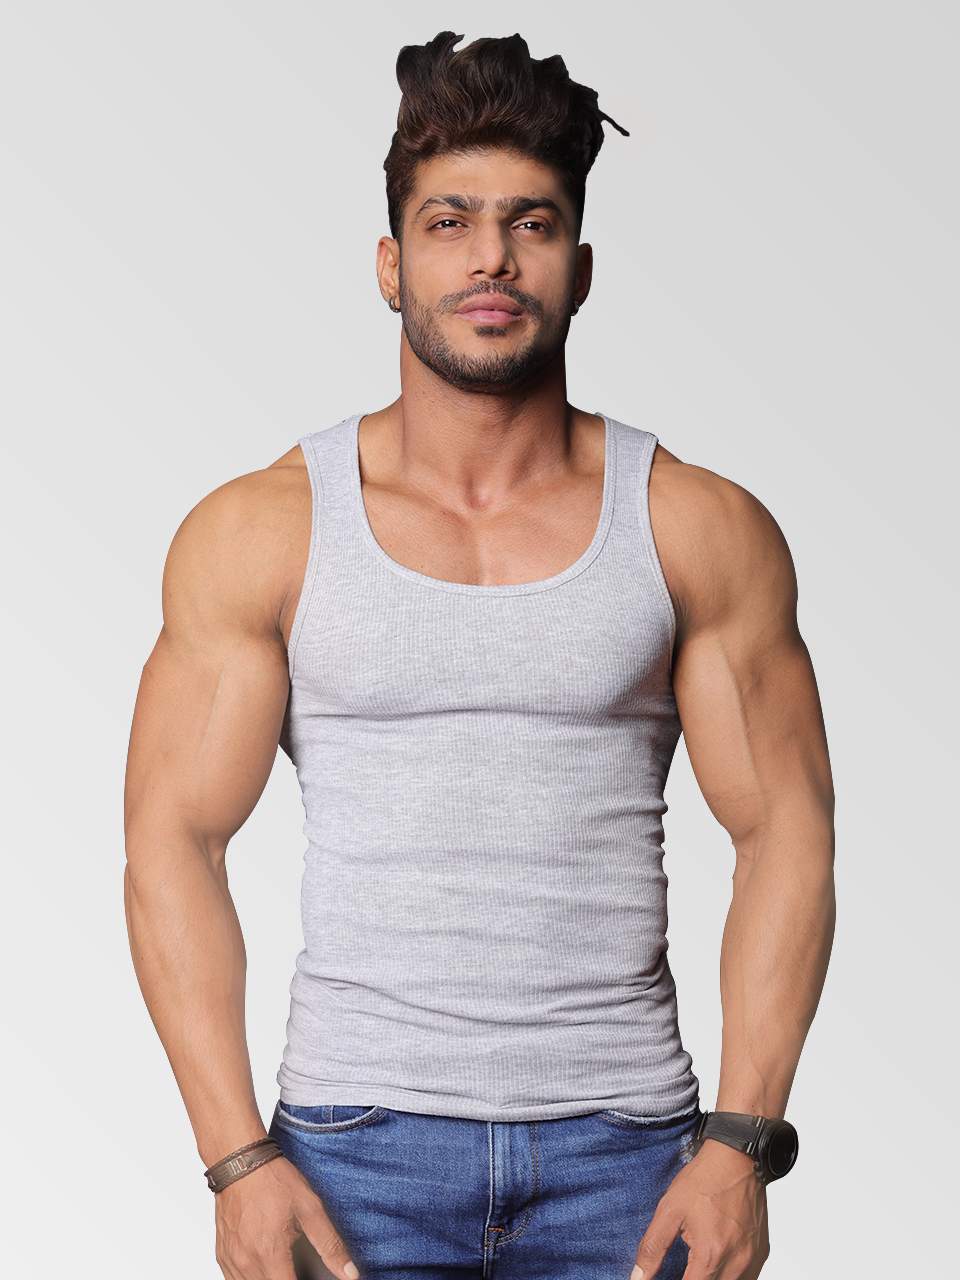 A-Shirts For Men | Buy Men's Tank Top Online